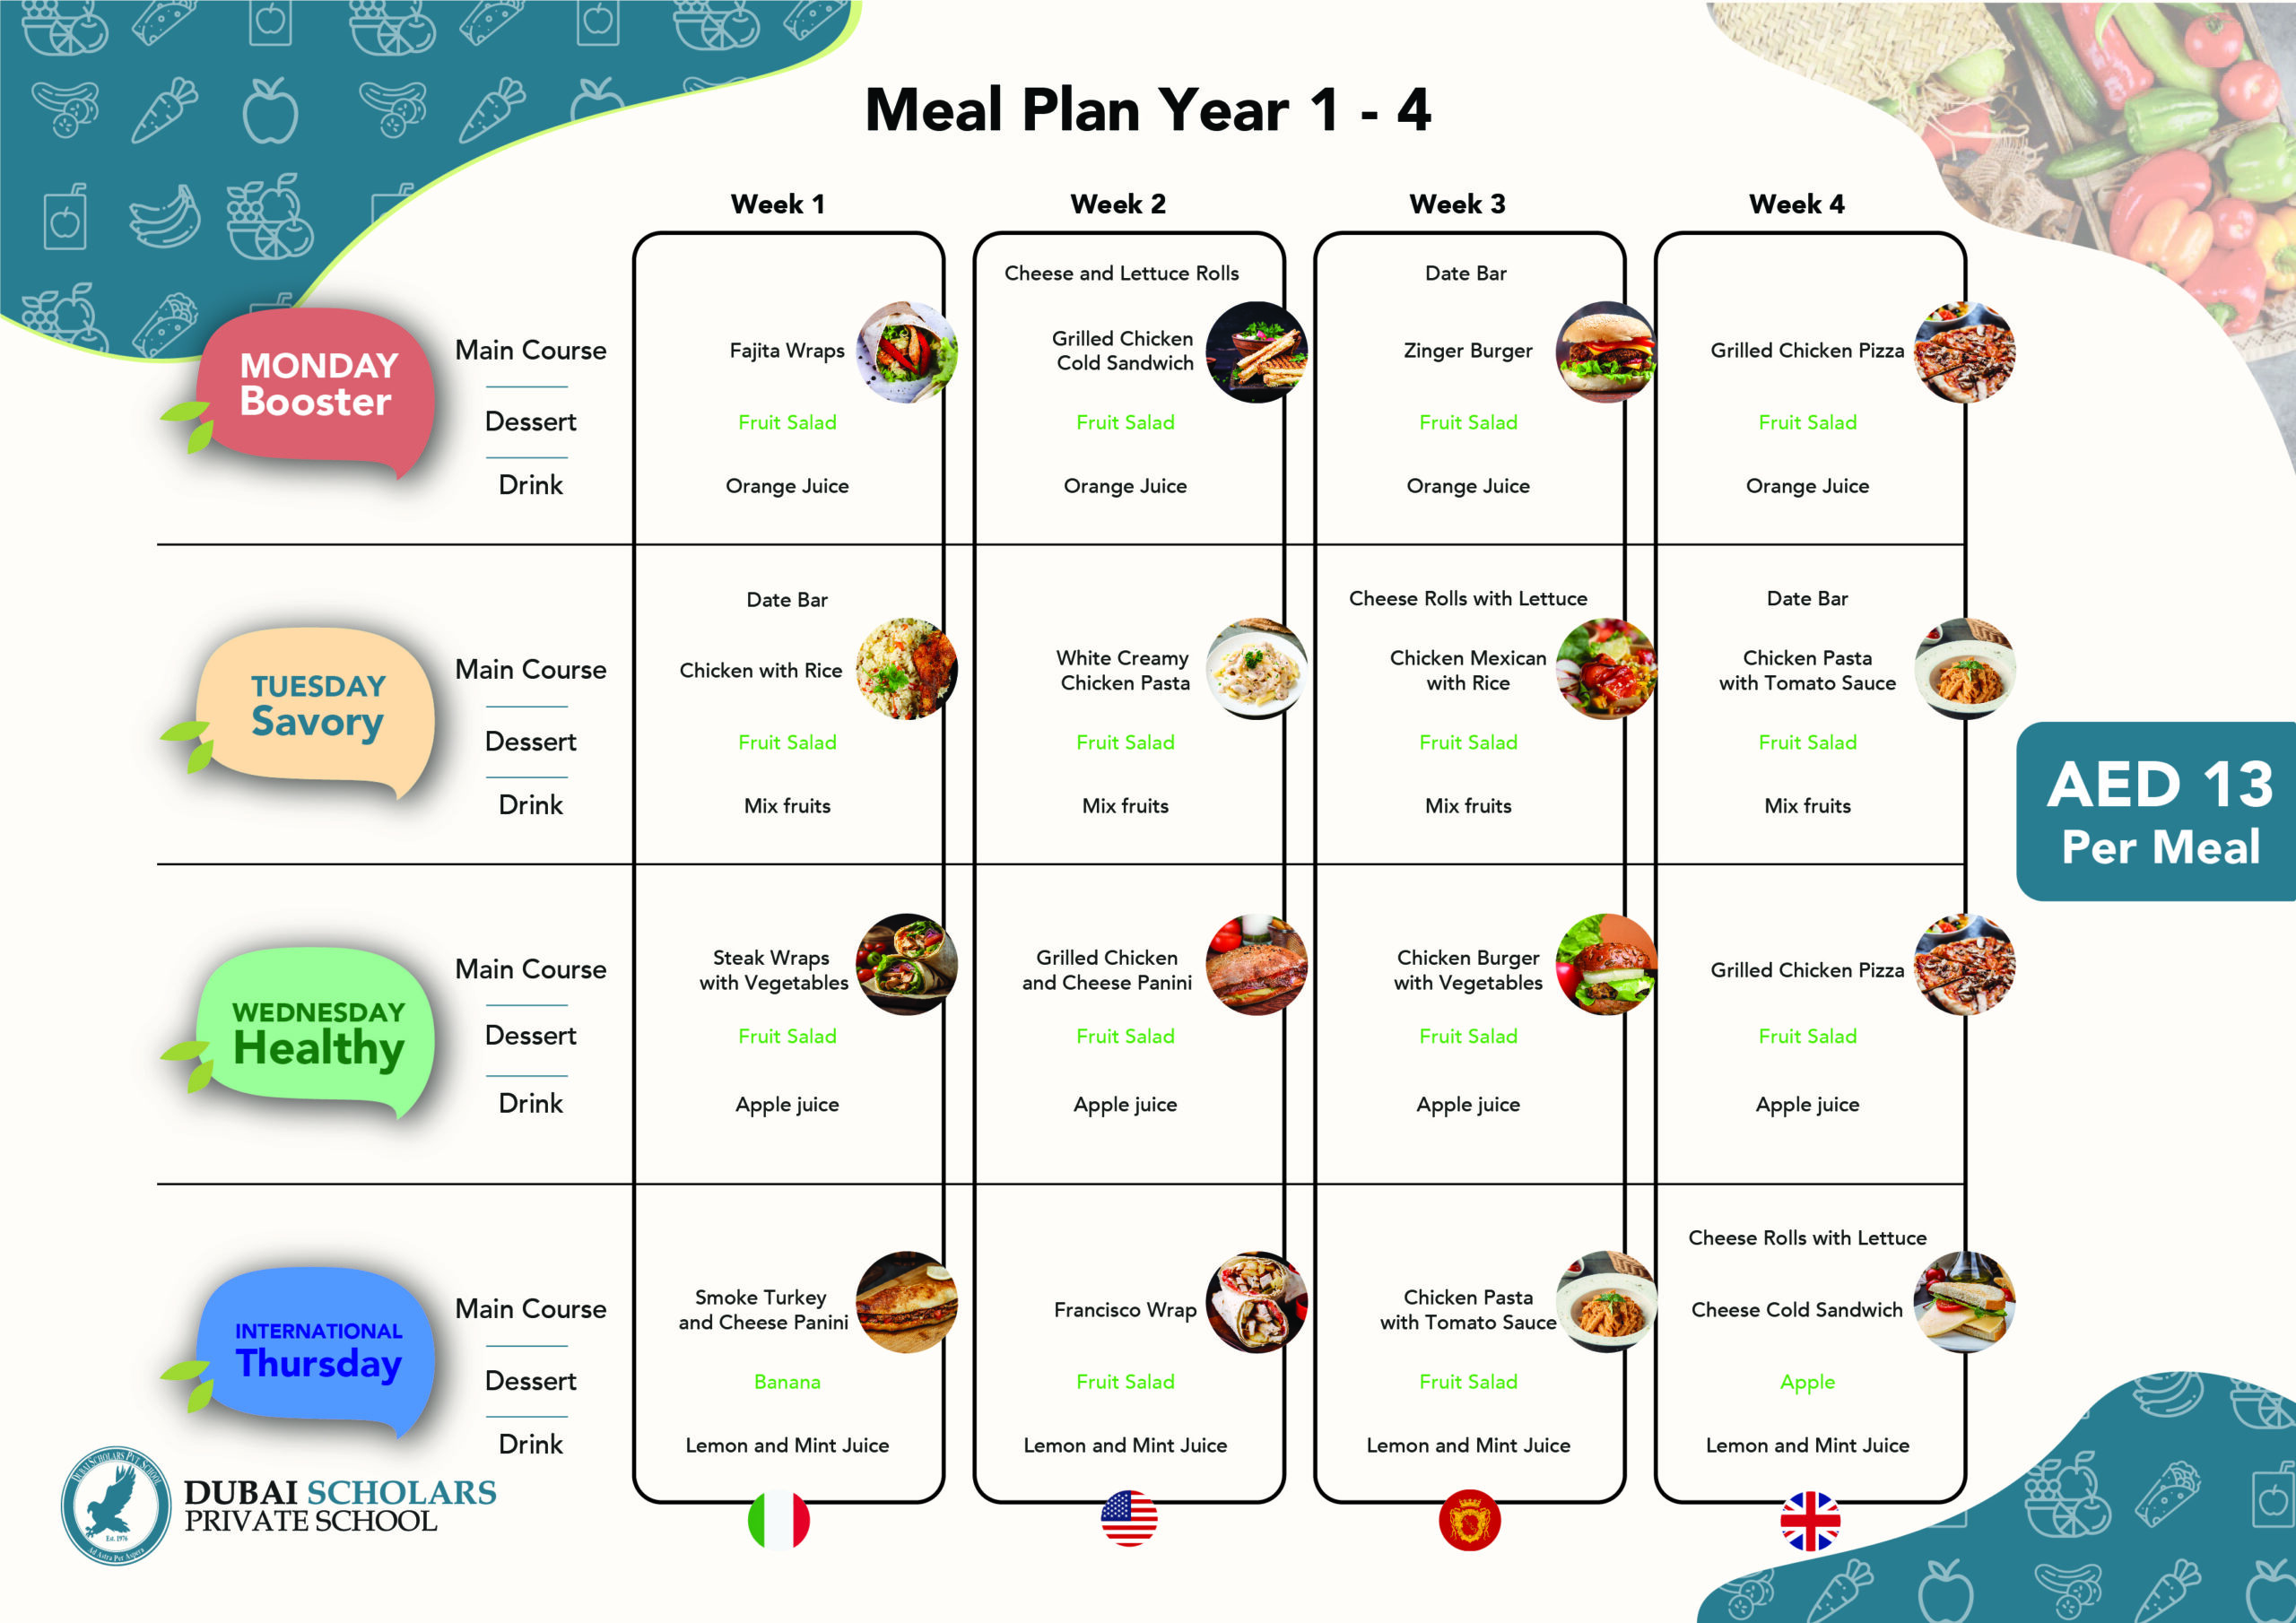 Dubai Scholars Meal Plan Year 1-4